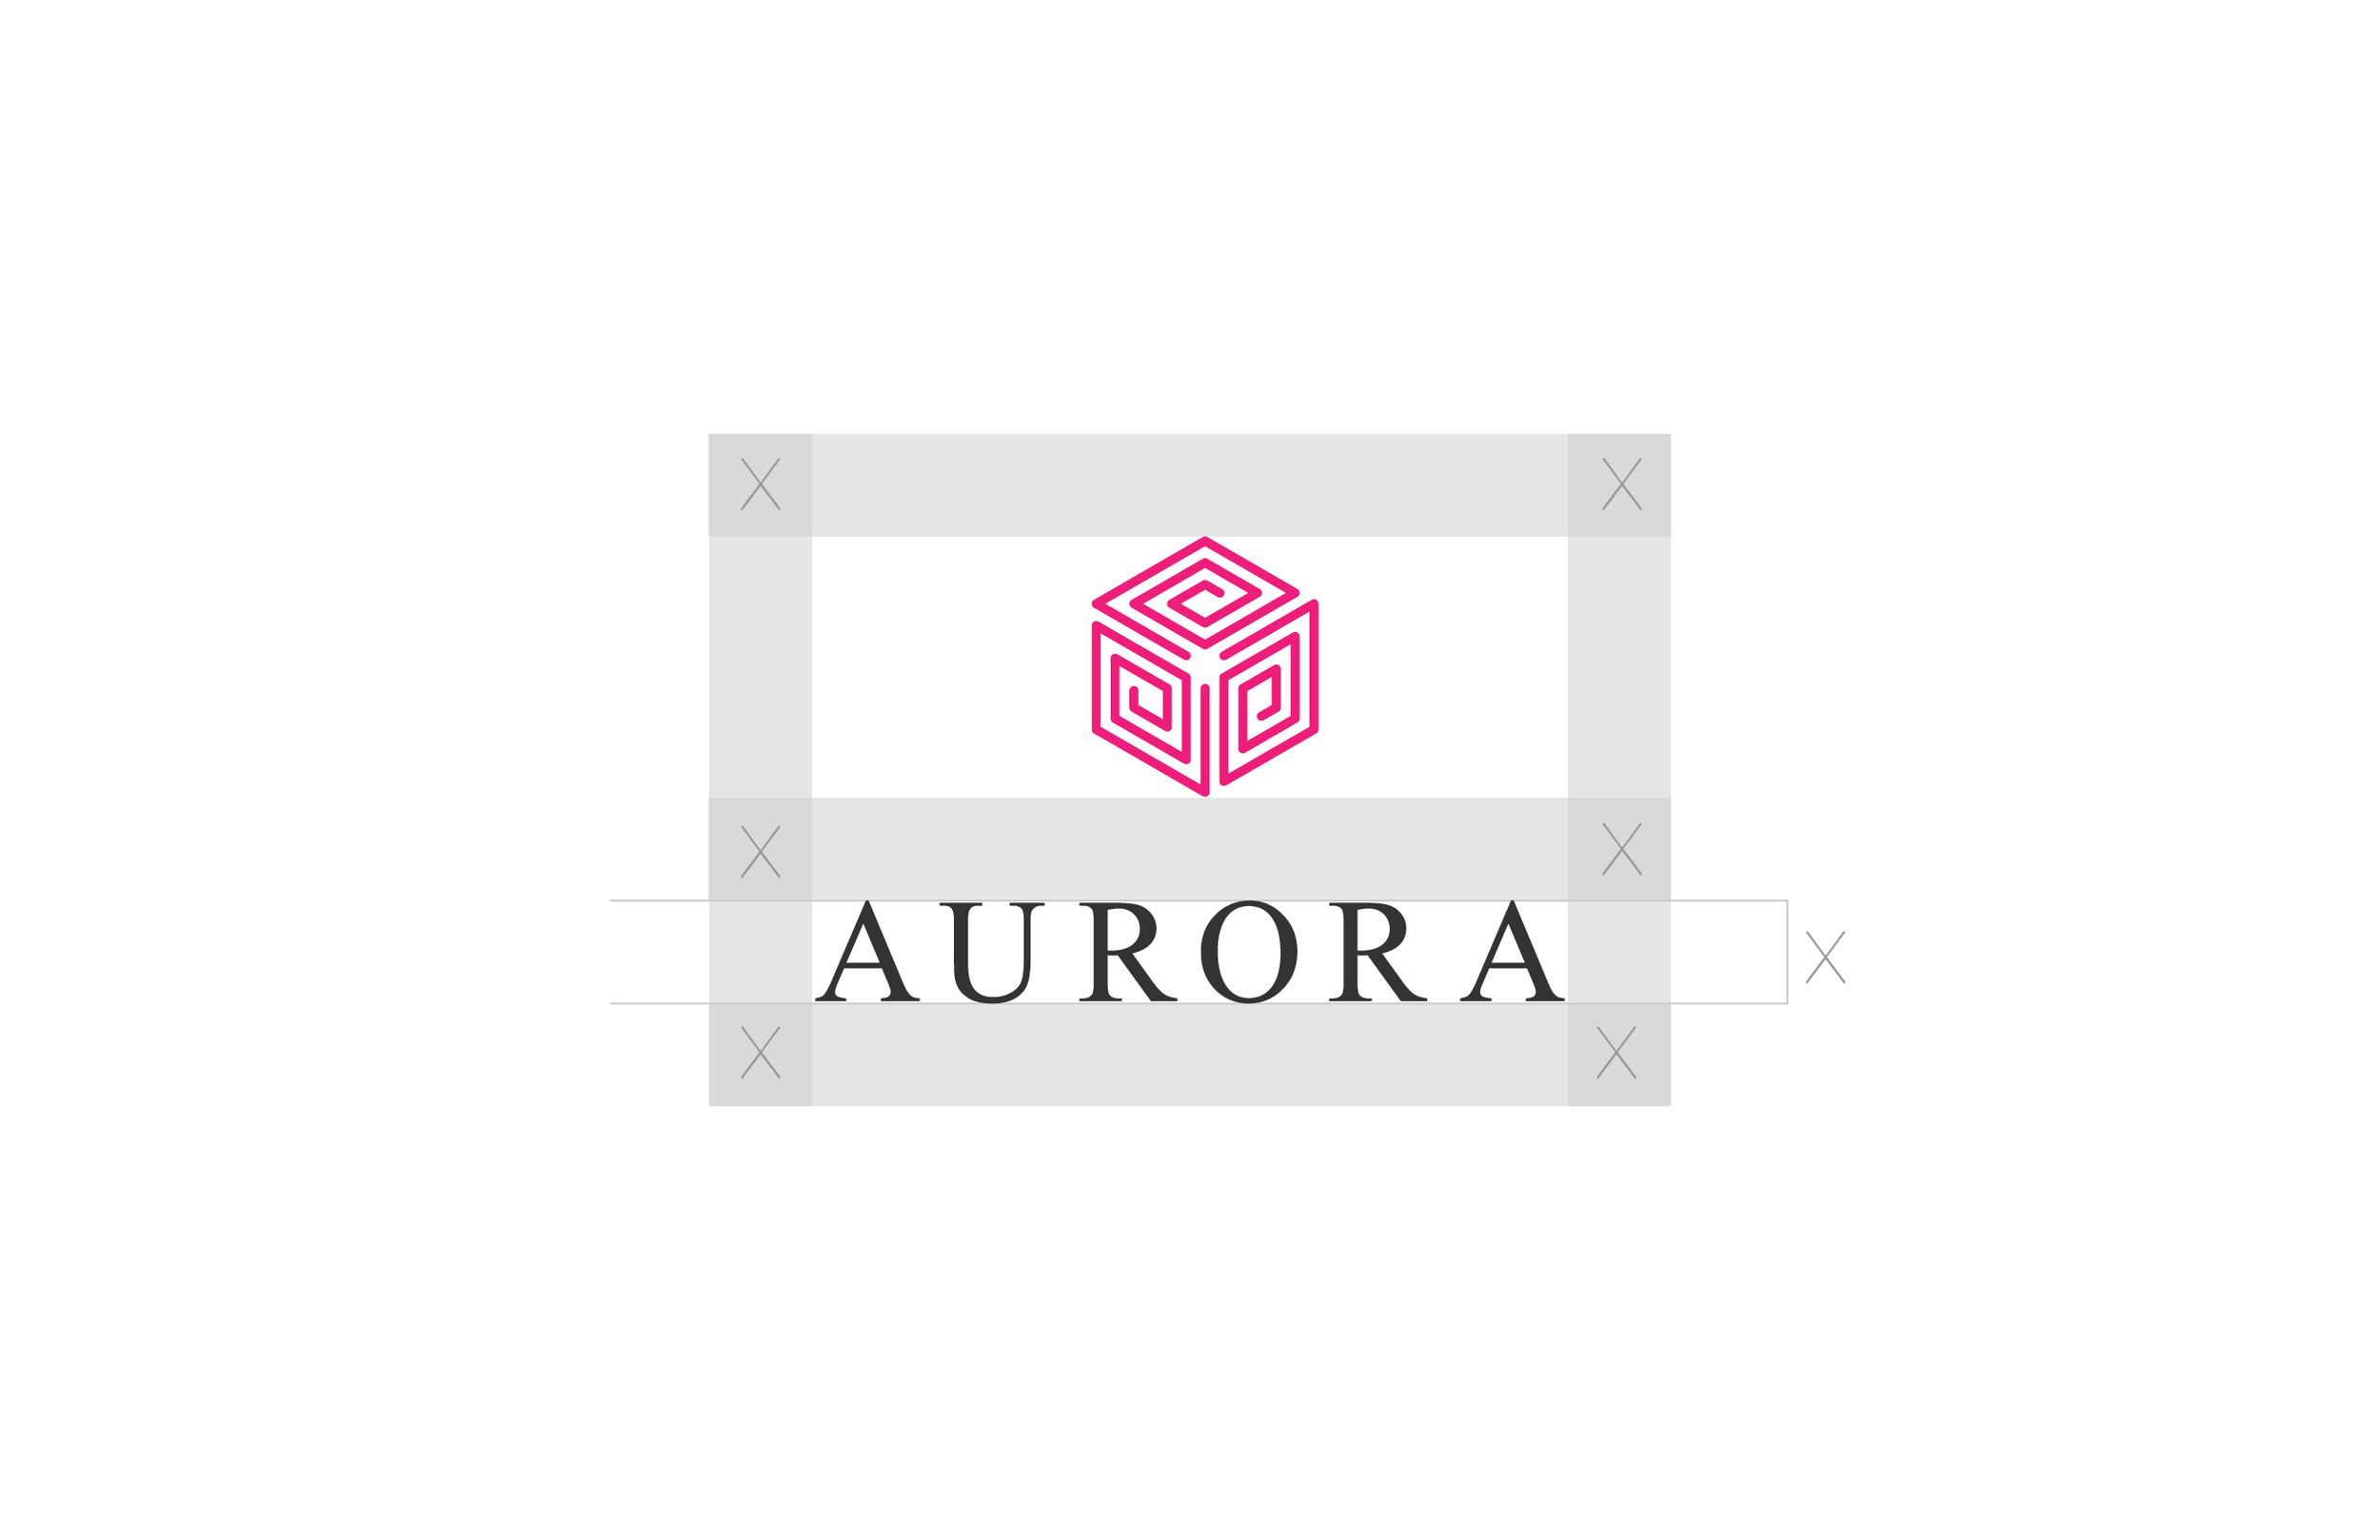 https://images.squarespace-cdn.com/content/v1/5846f173e4fcb5c4eda0572d/1482166179701-5T8TG401HRMBOOE1IKA0/Aurora-Brand-Guidelines-05.png?format=2500w